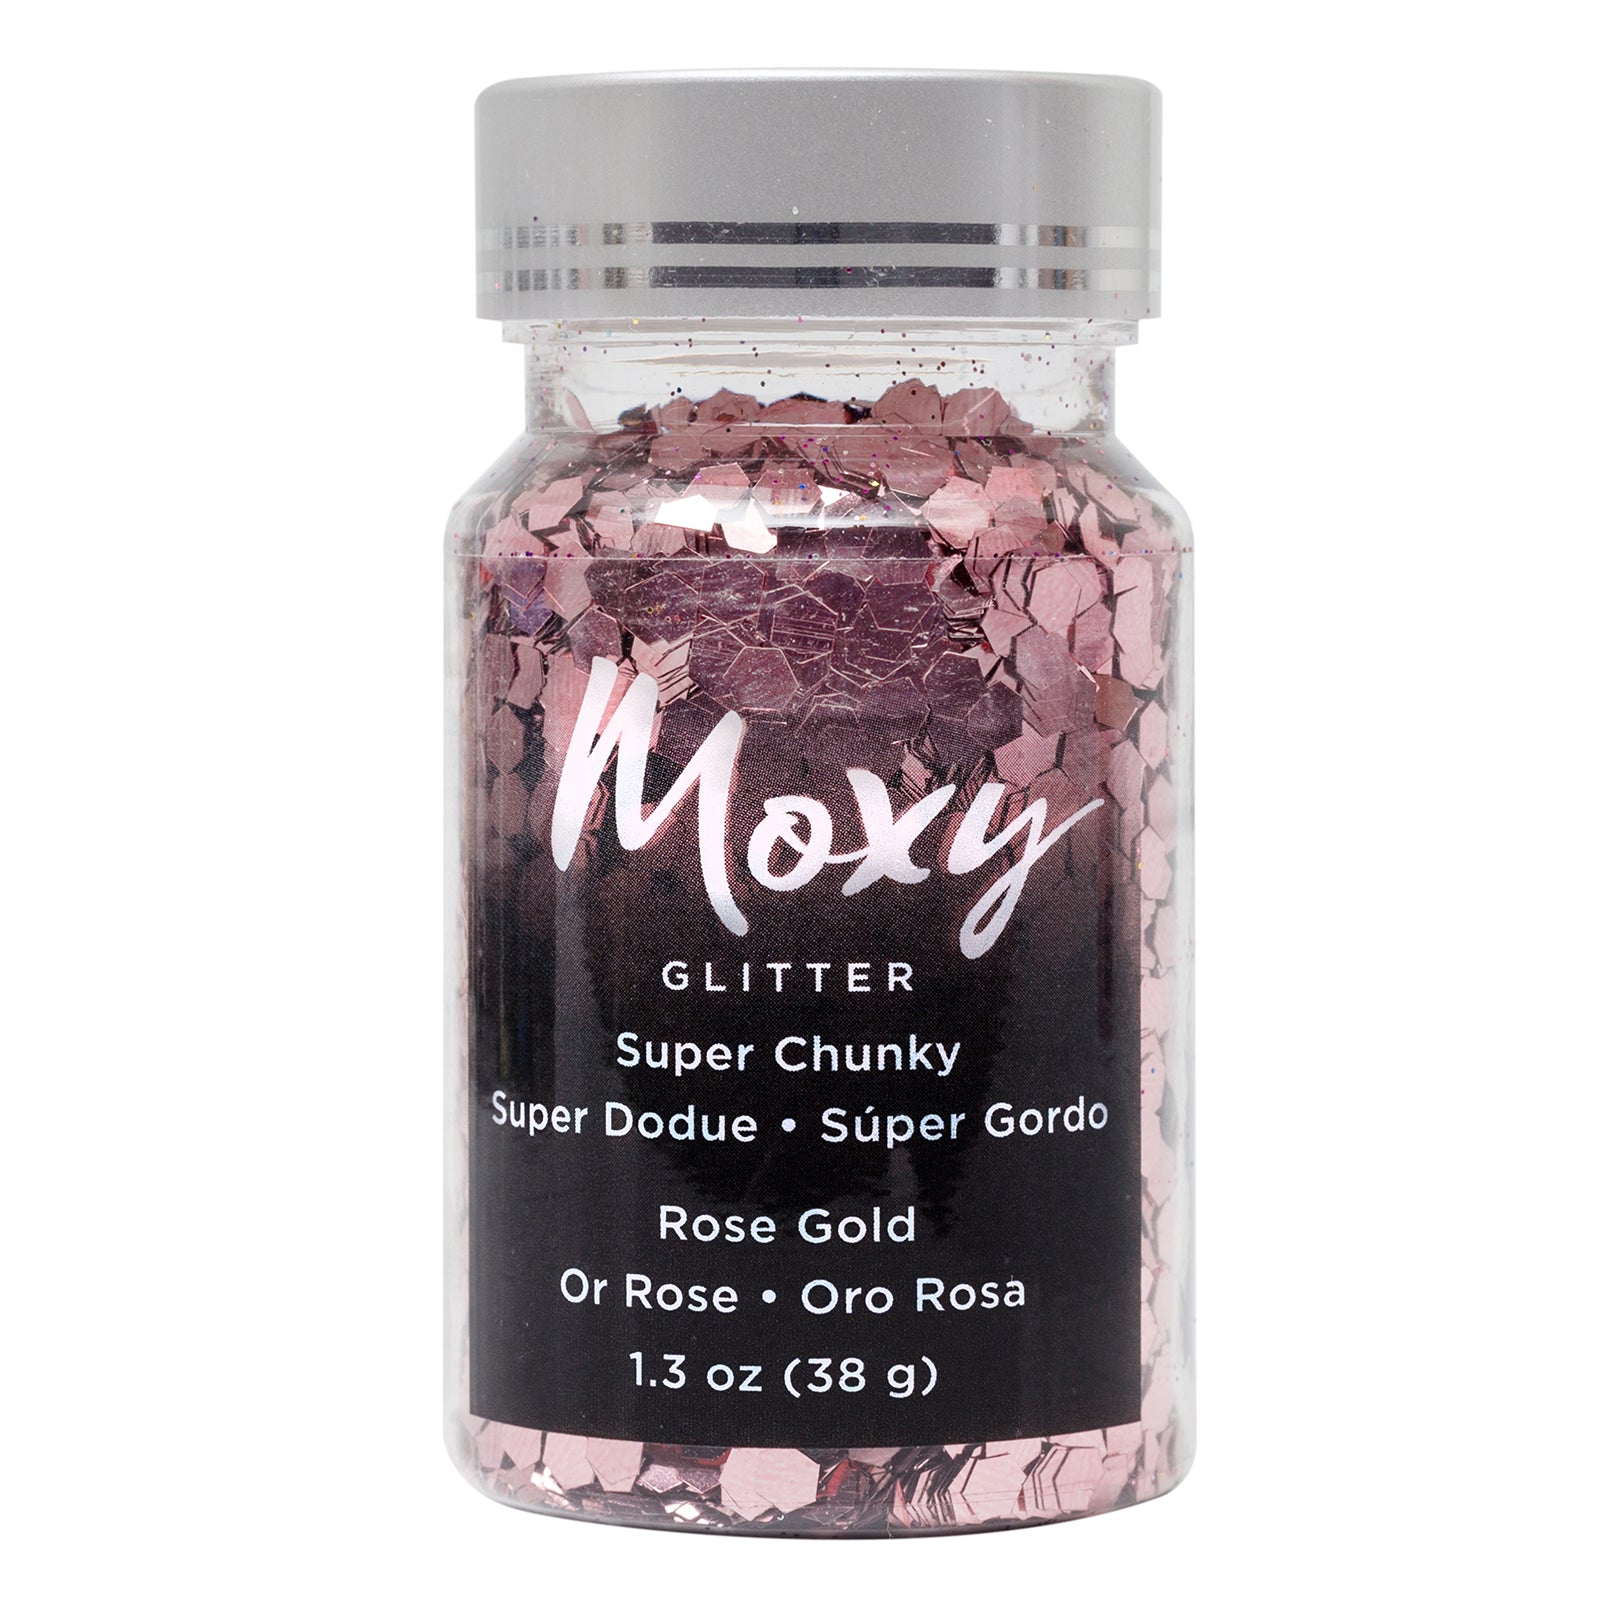 Moxy Glitter Super Chunky - Rose Gold 1 oz+ Bottle - CraftCutterSupply.com